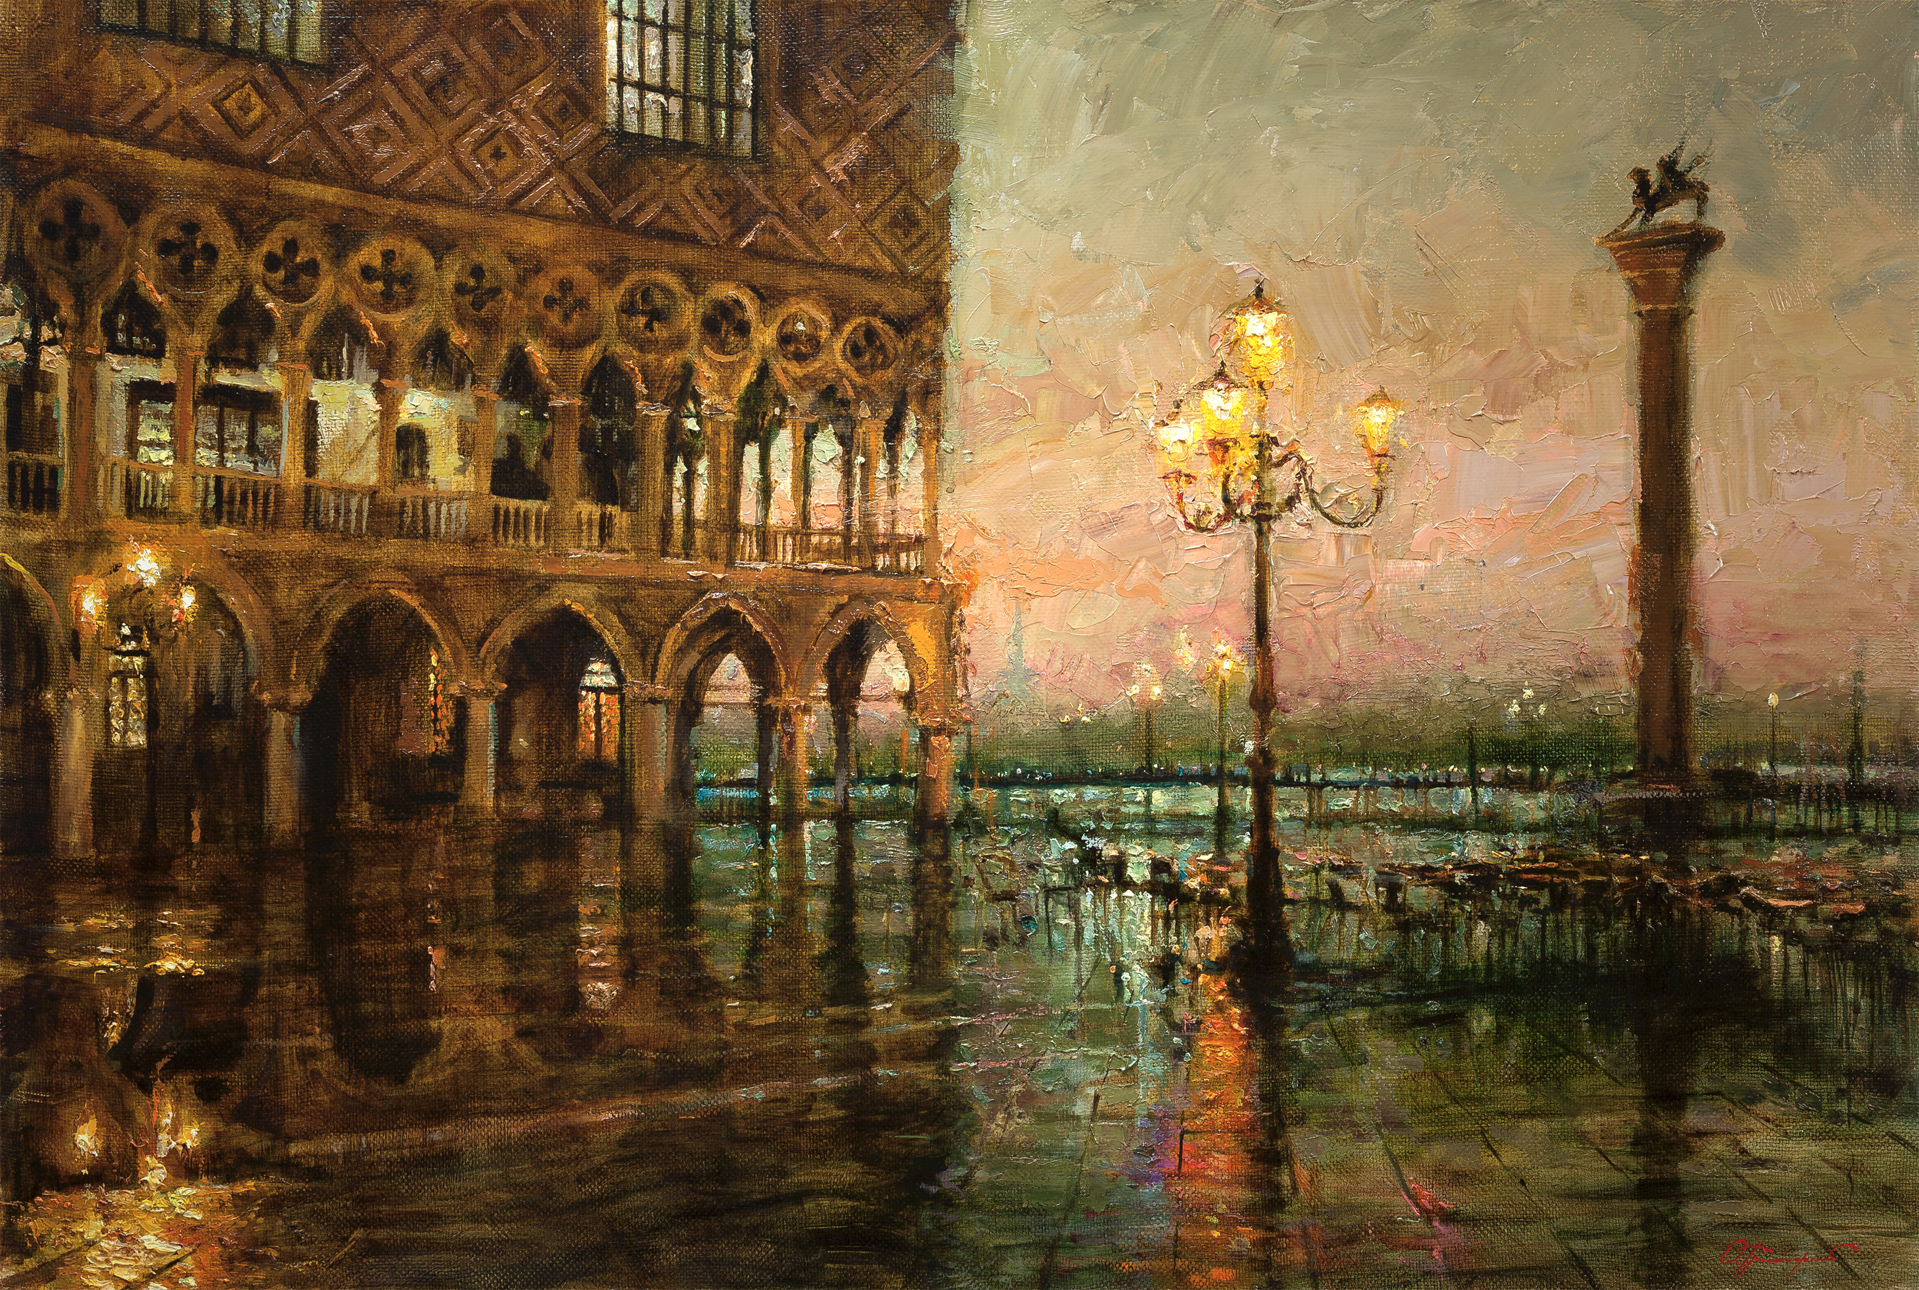 "Night in Venice" by Oleg Trofimov